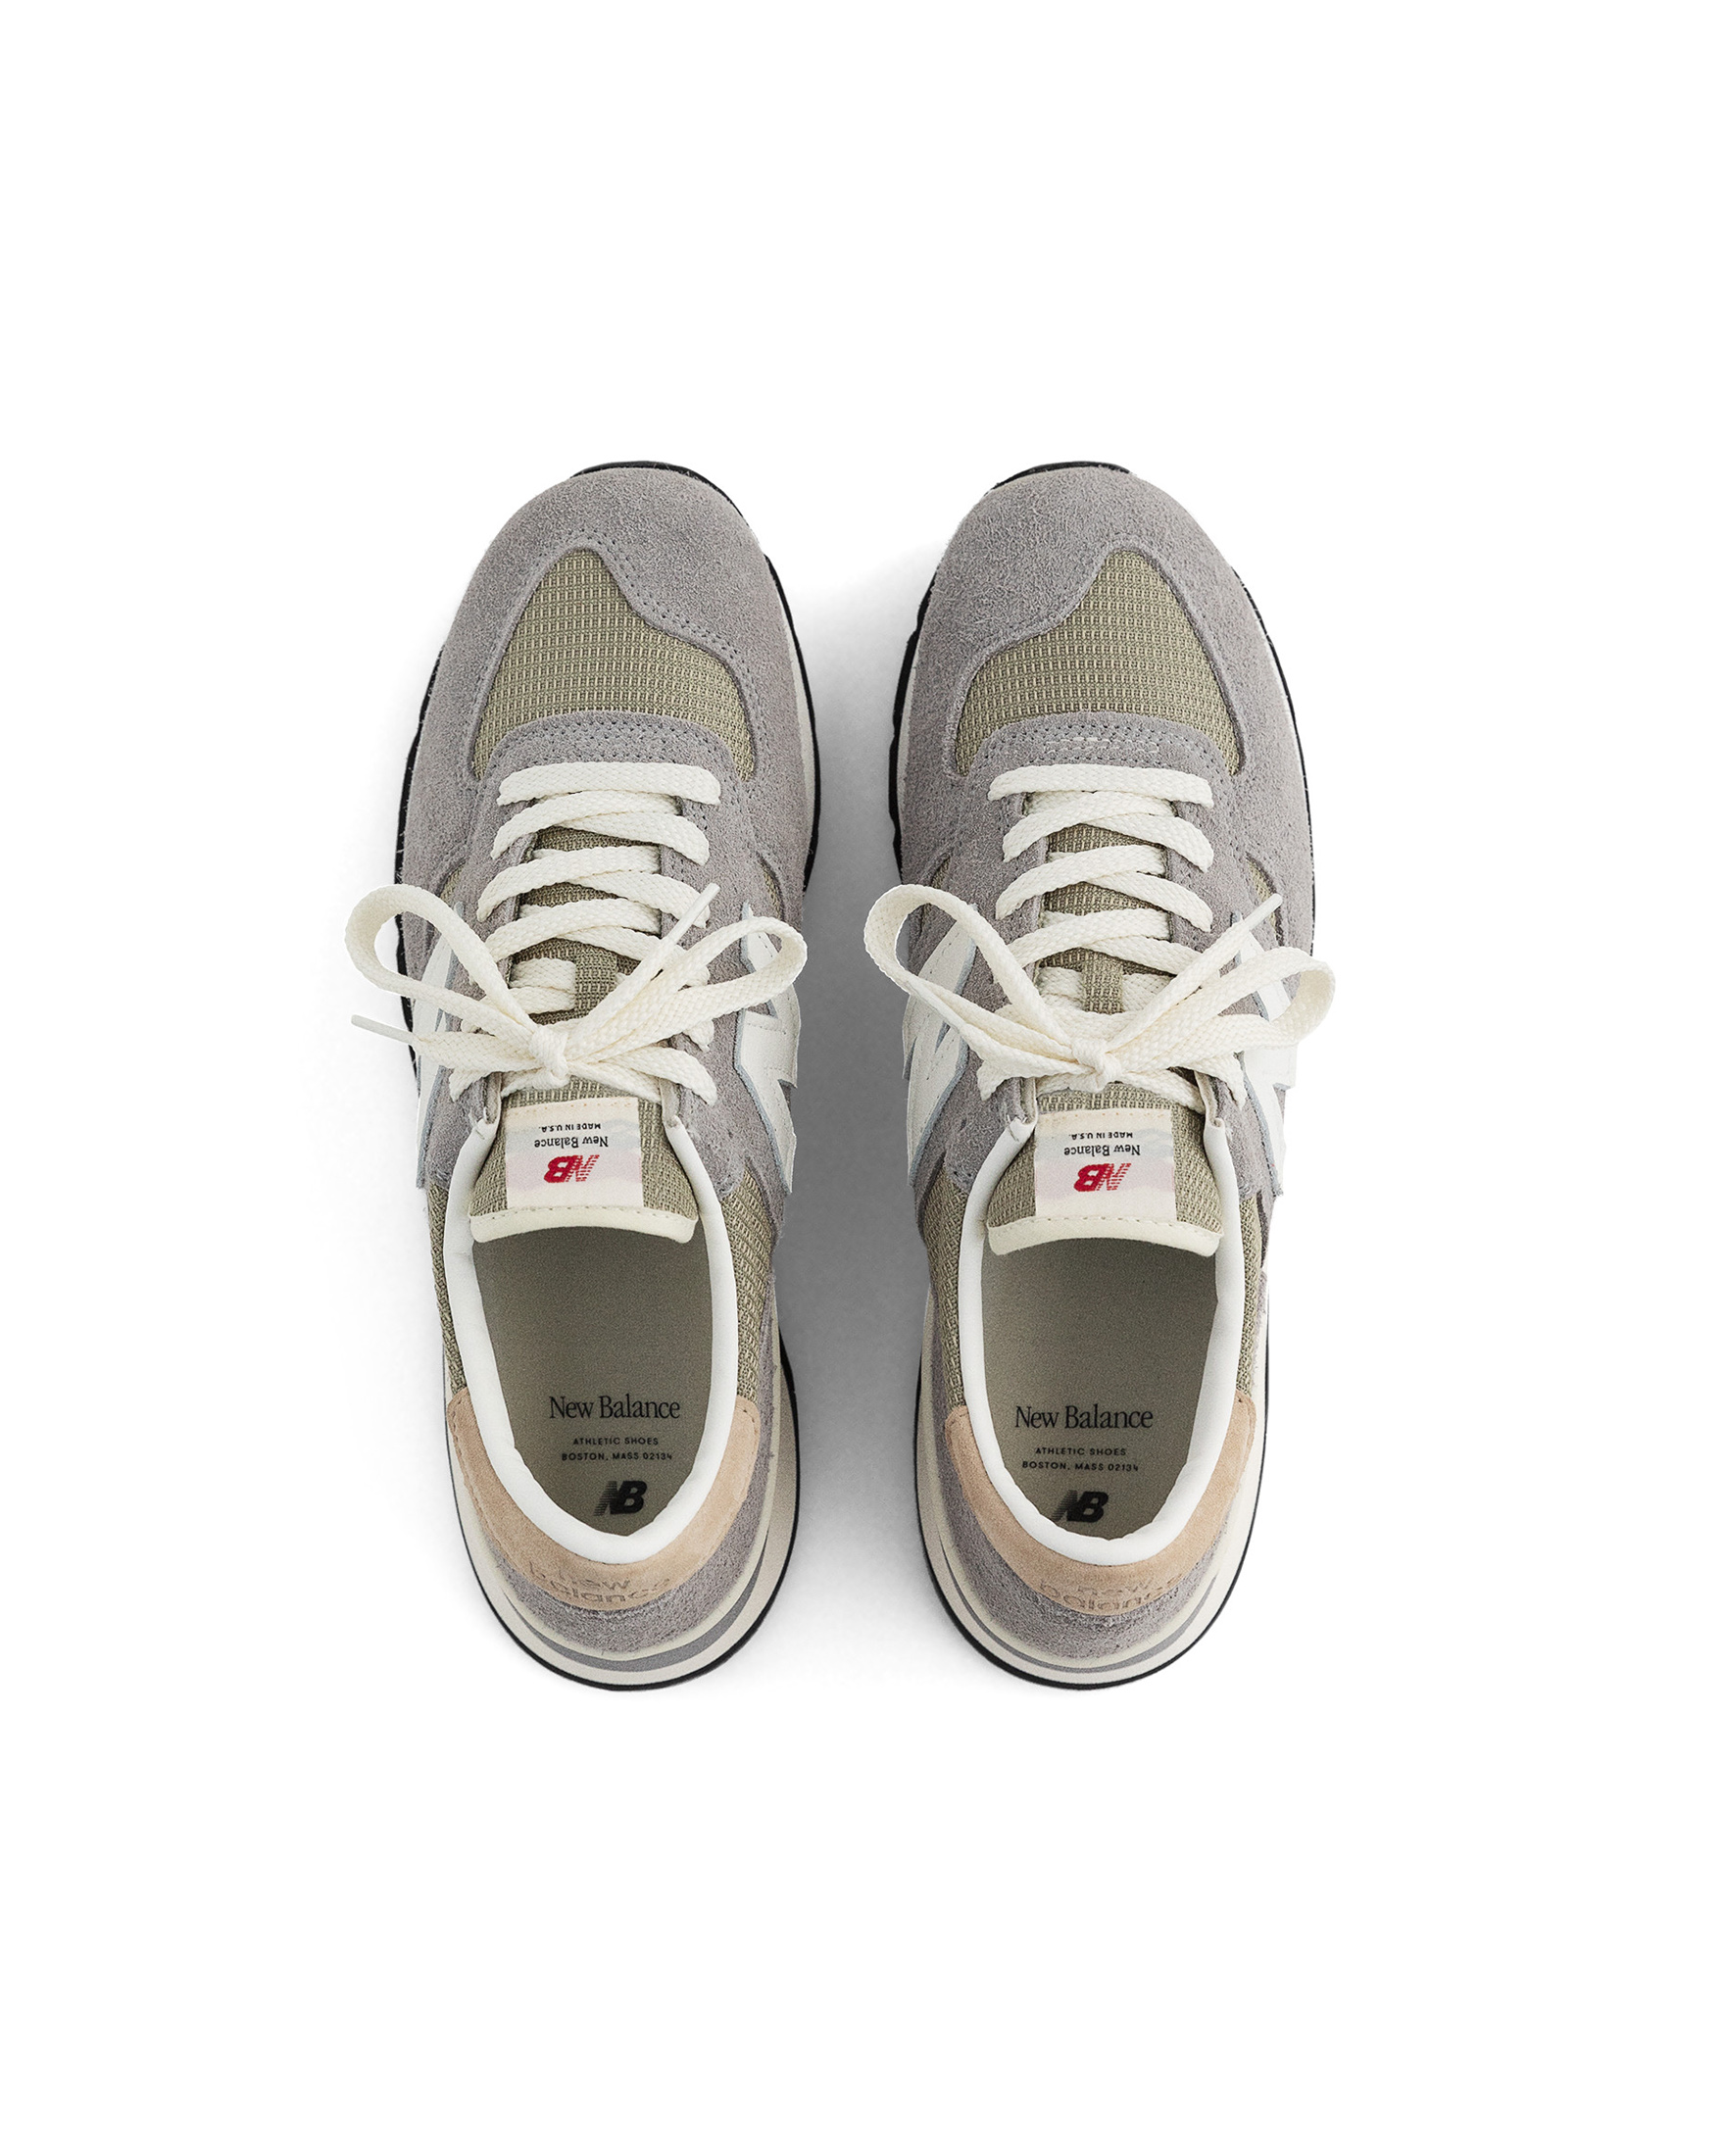 M990TA1 New Balance Footwear Sneakers Grey